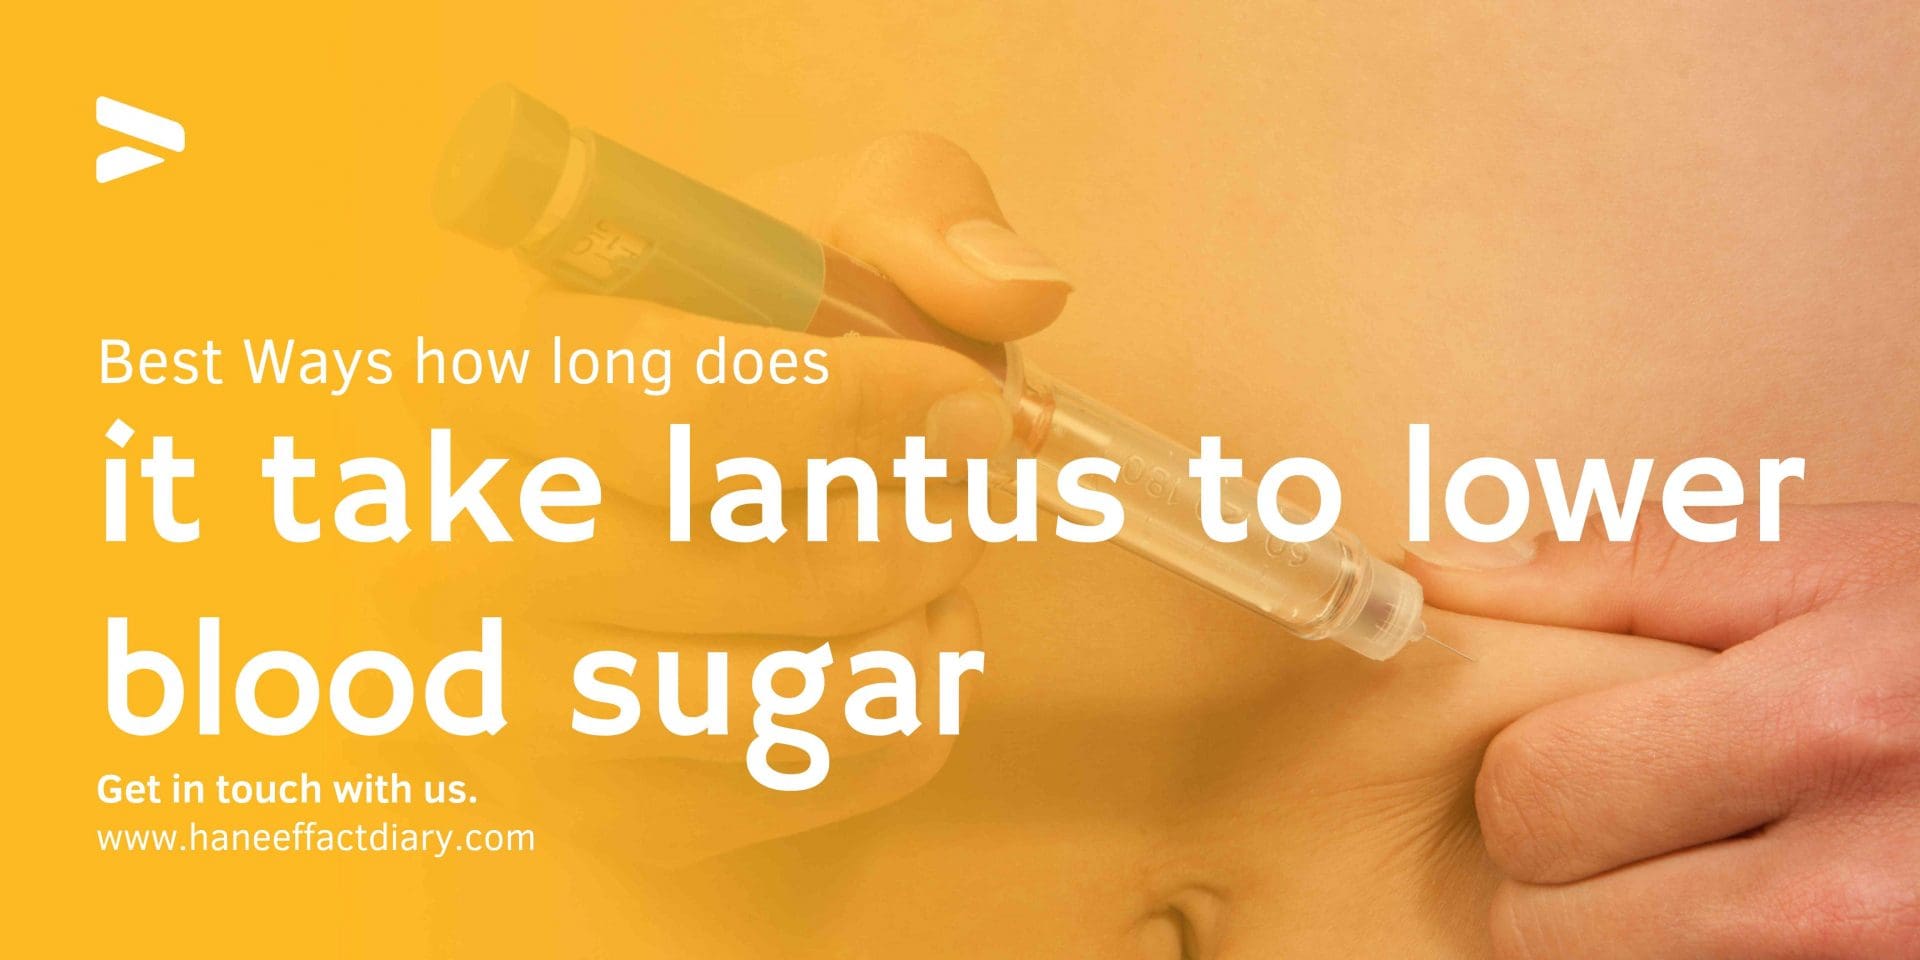 Best Ways how long does it take lantus to lower blood sugar 2022